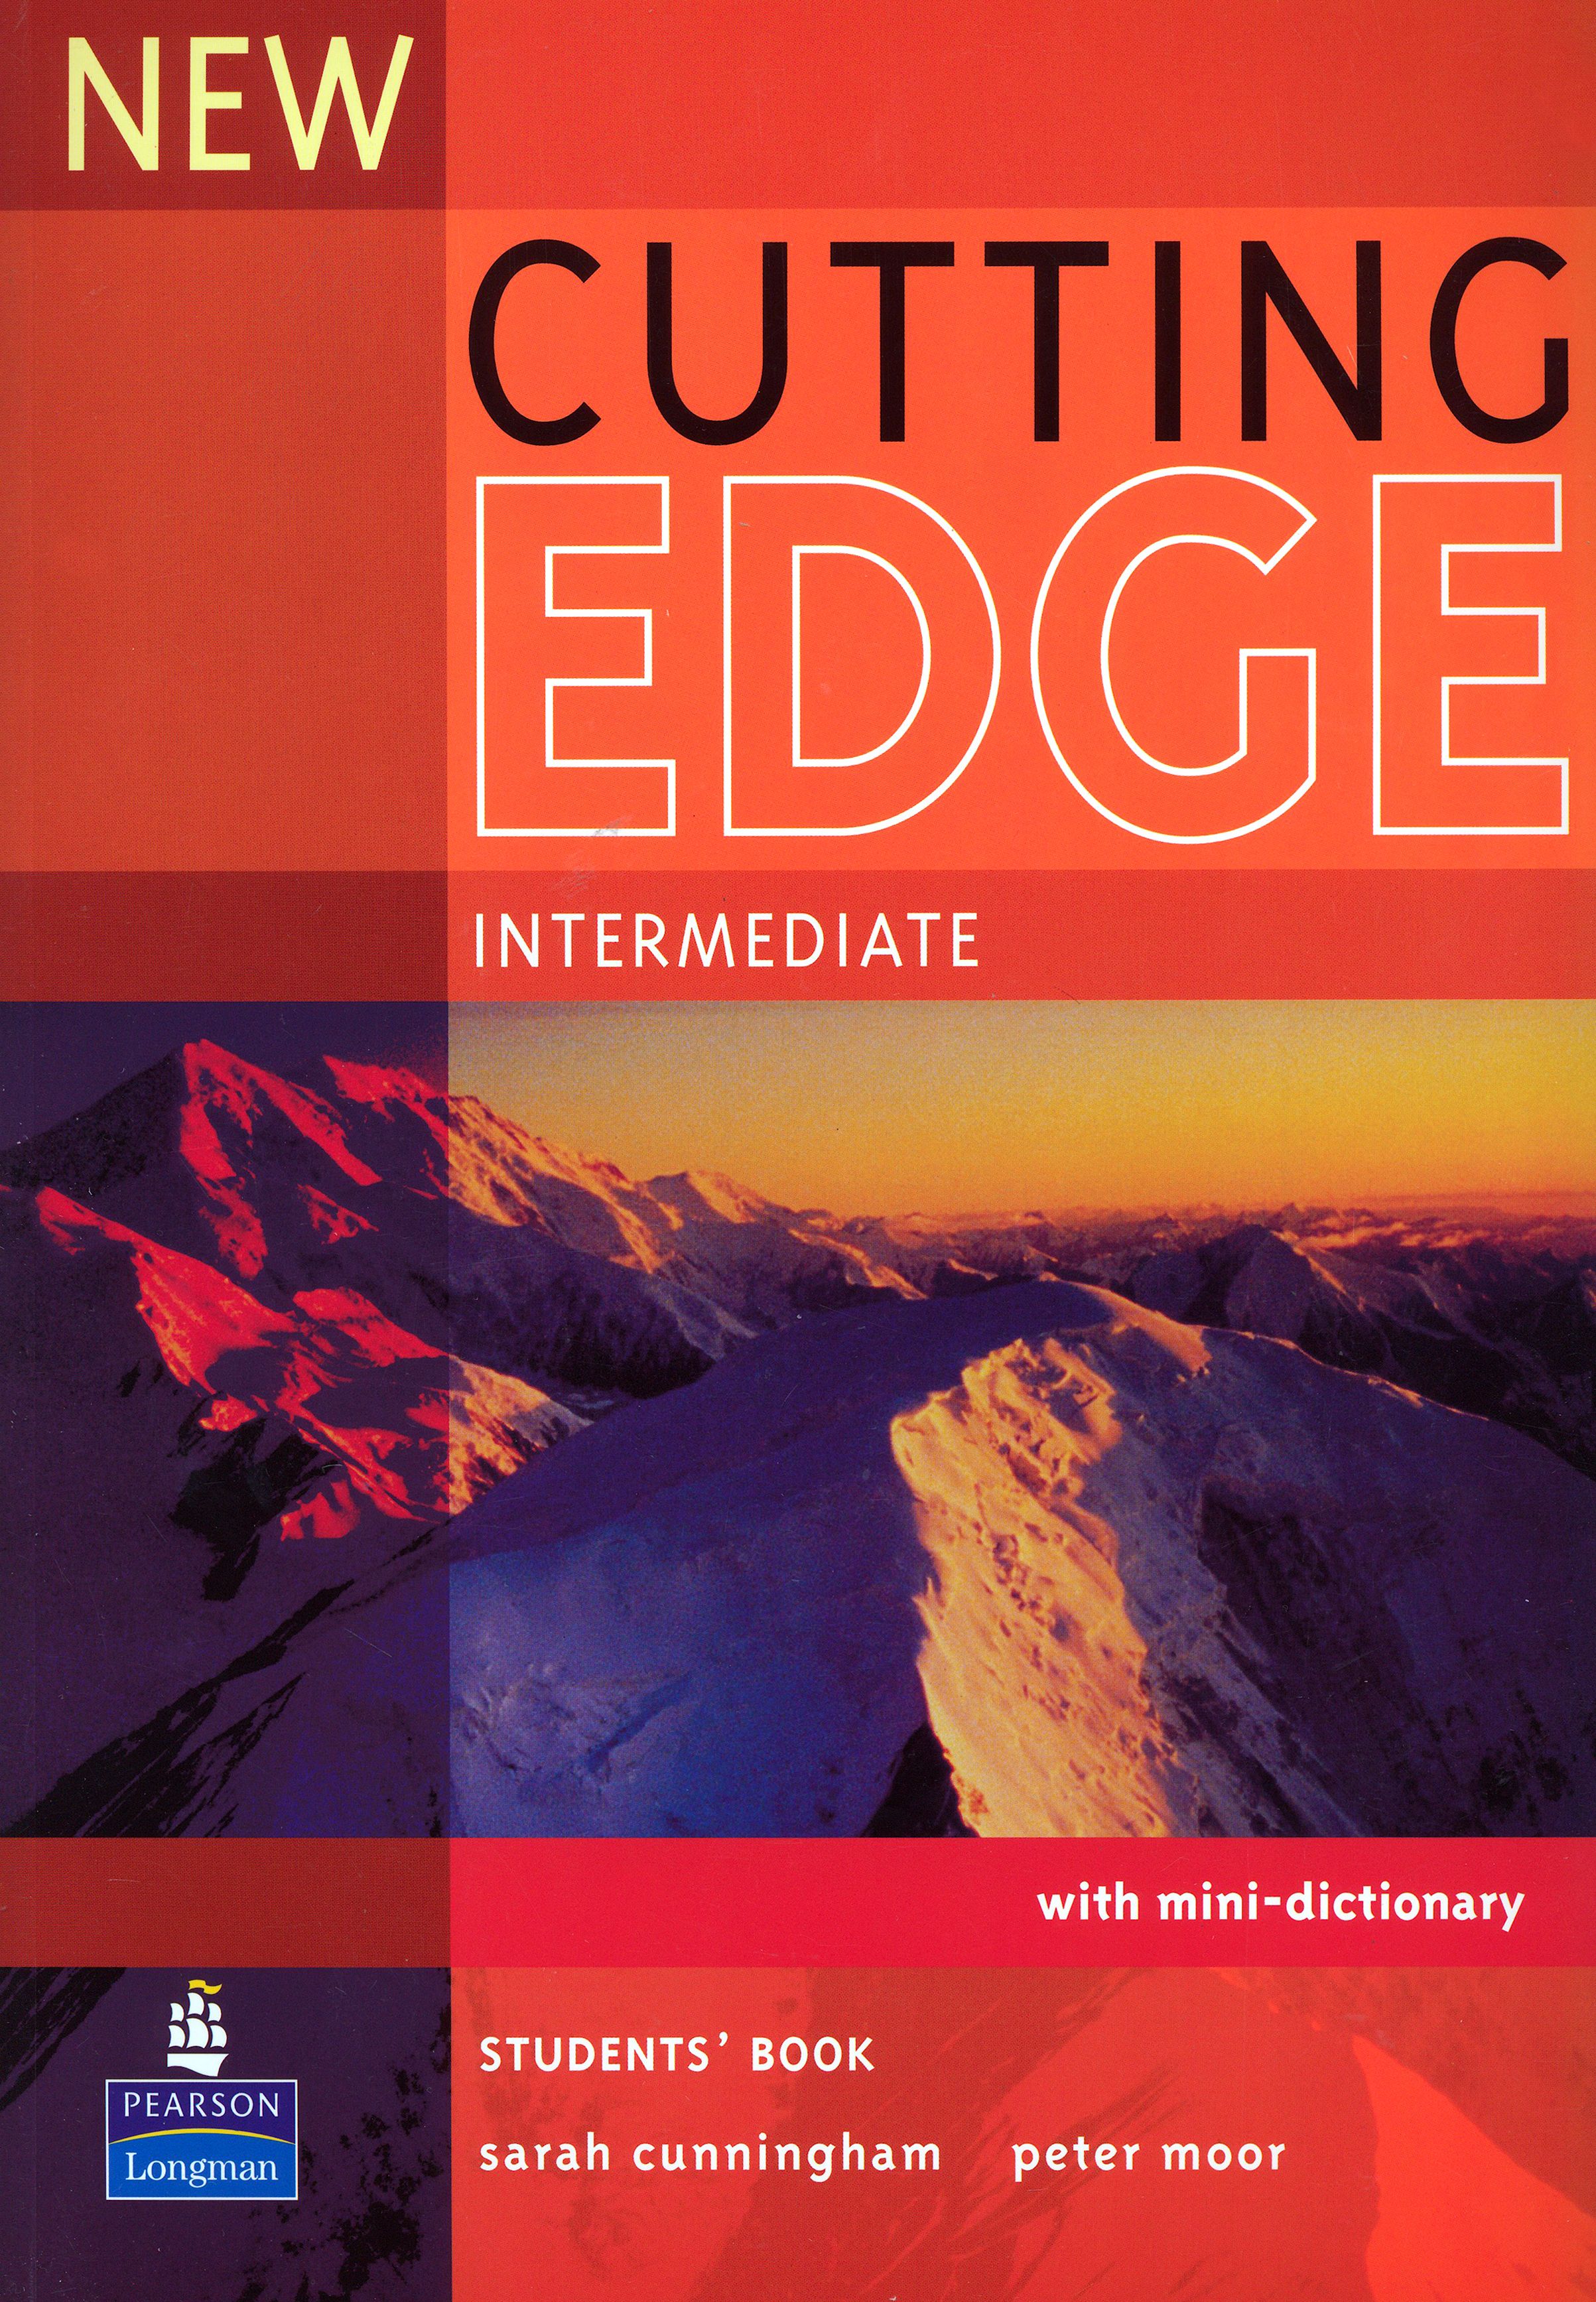 New cutting edge intermediate. New Cutting Edge учебник. New Cutting Edge Upper Intermediate student's book. Cutting Edge Intermediate 3rd Edition. Cutting Edge Intermediate student's book.